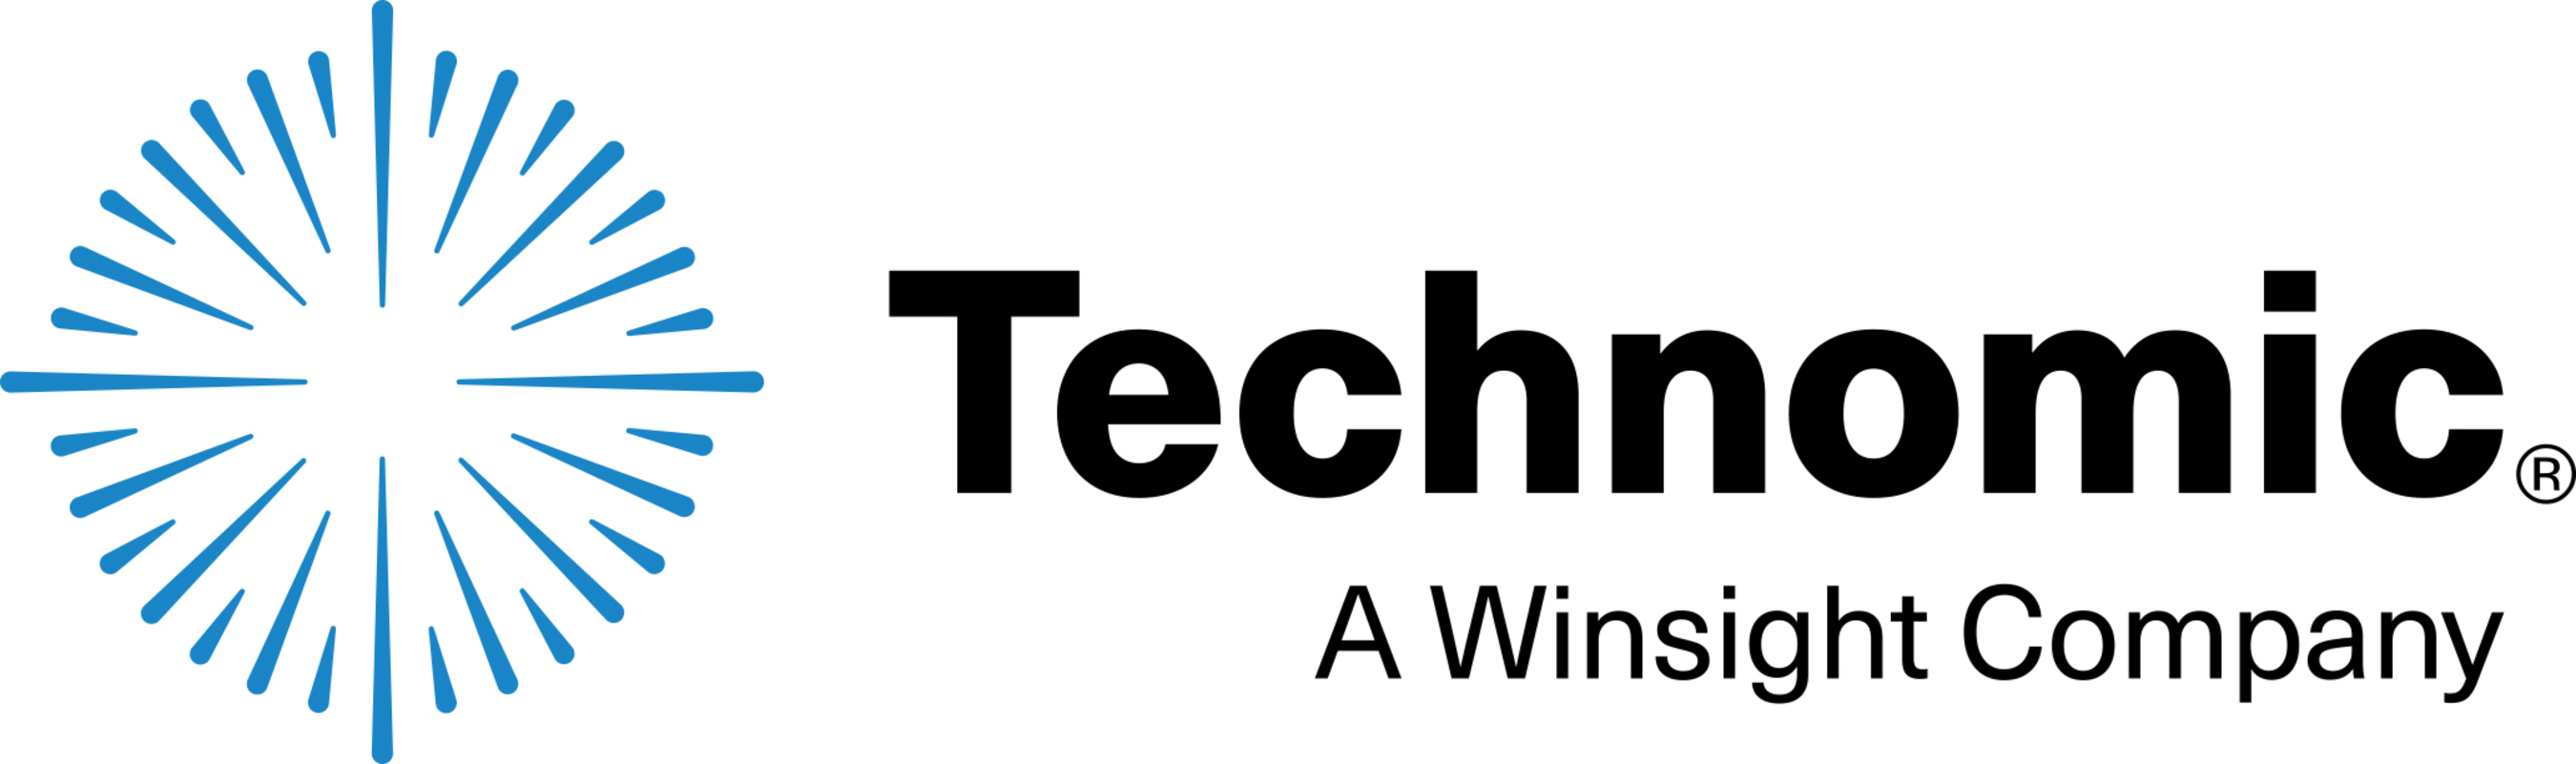 Technomic Inc. Logo. (PRNewsFoto/Technomic Inc.)